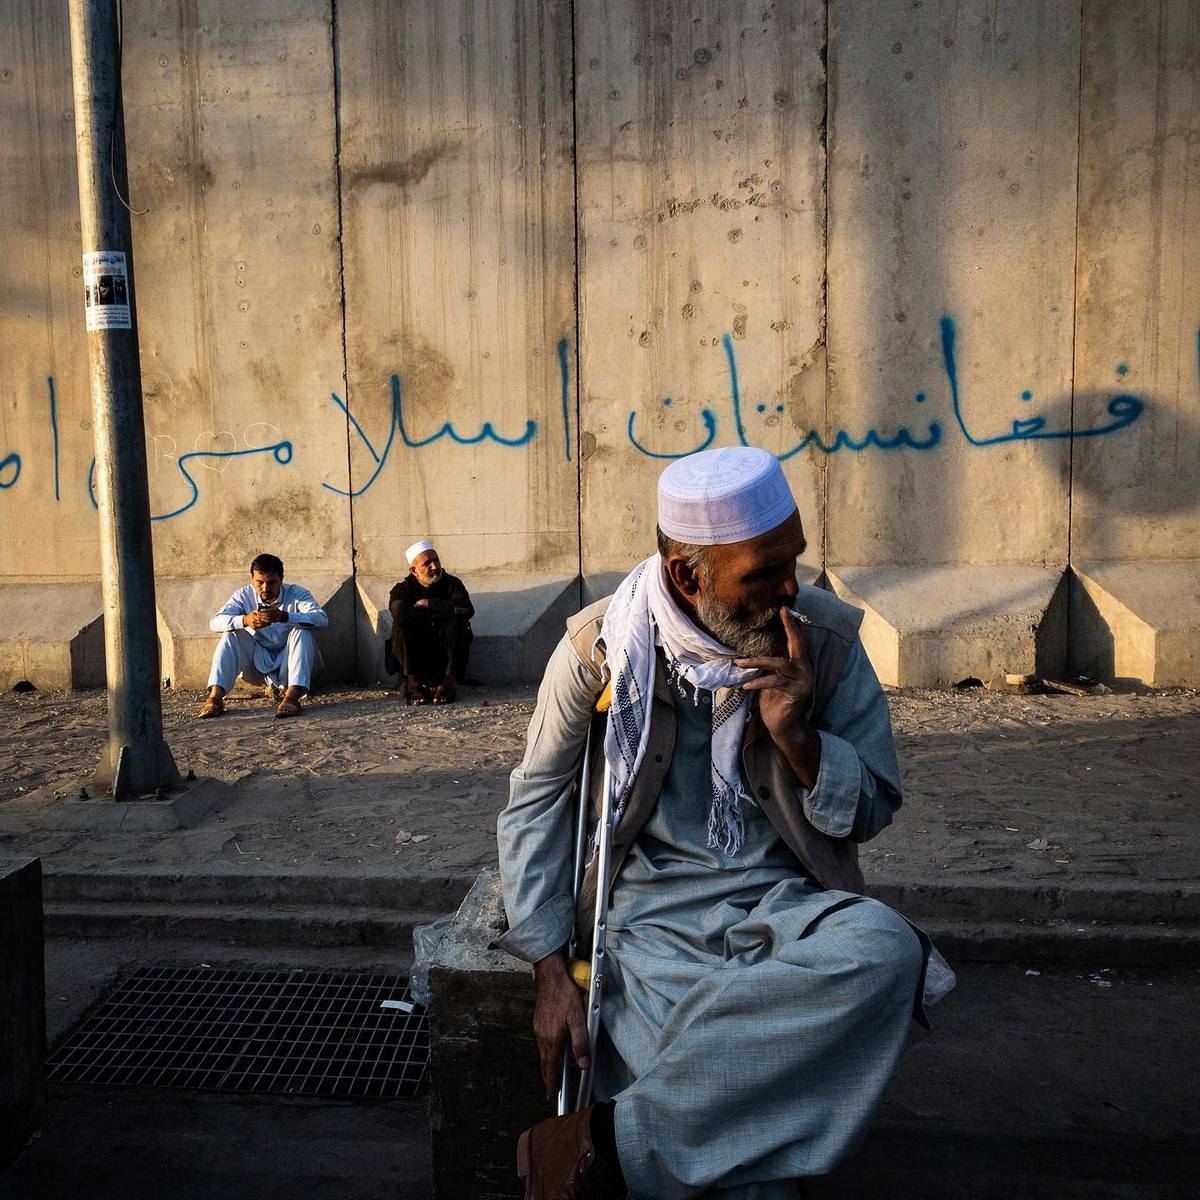 Снимки Афганистана от фотожурналиста Эндрю Куилти